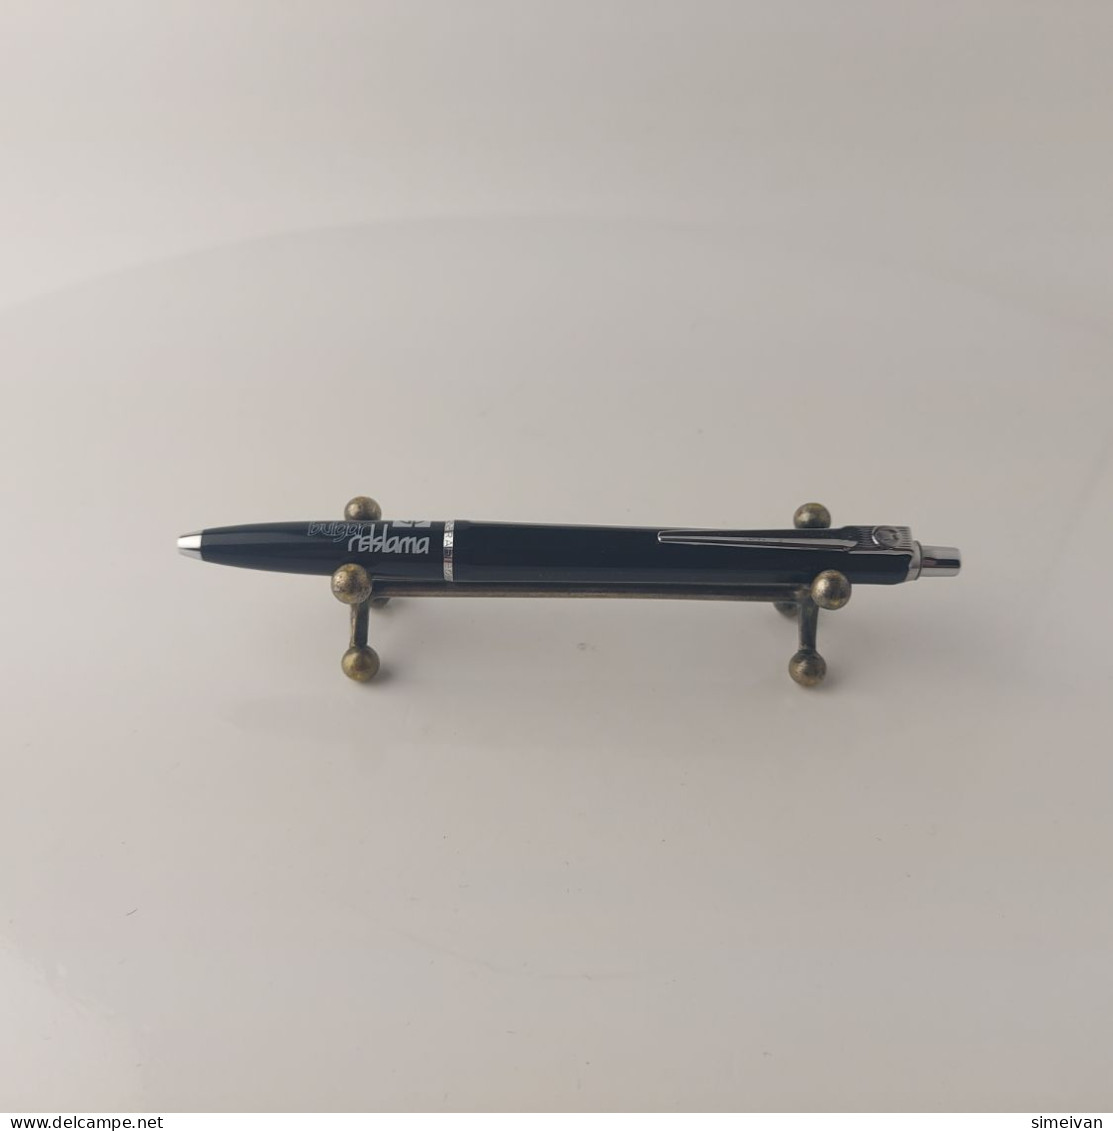 Vintage Ballograf Epoca Ballpoint Pen Black Chrome Trim Made In Sweden #5525 - Lapiceros